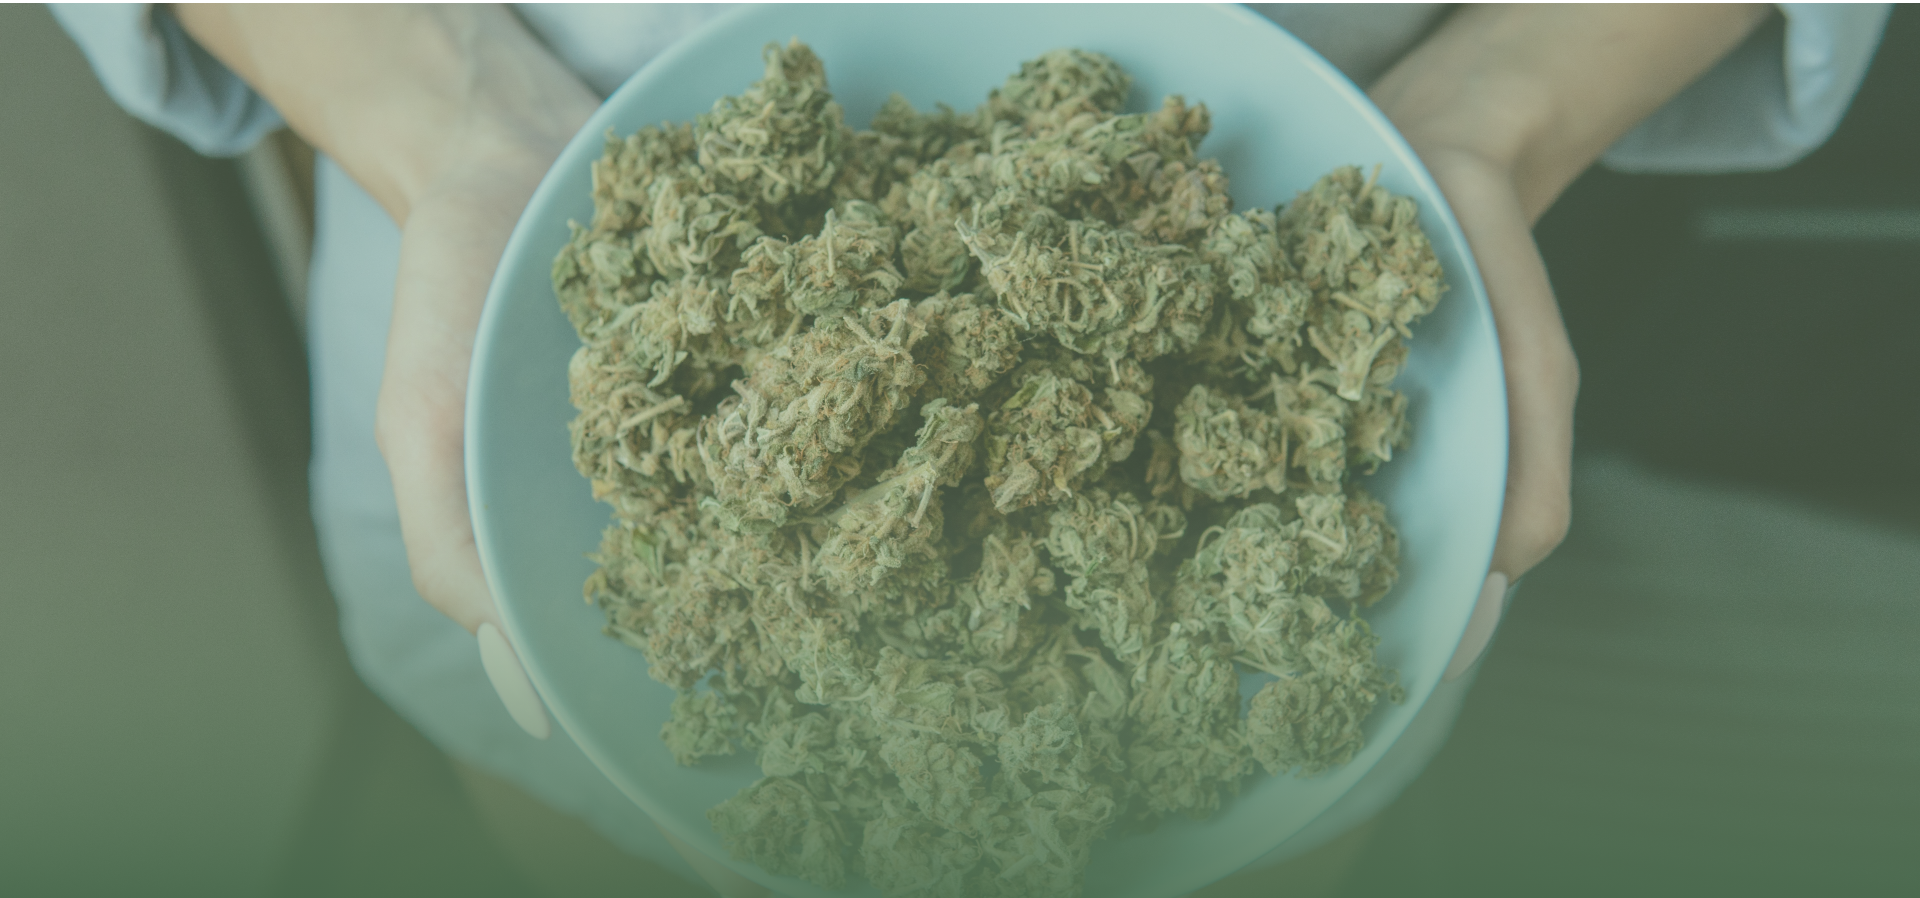 A bowl filled with marijuana buds.